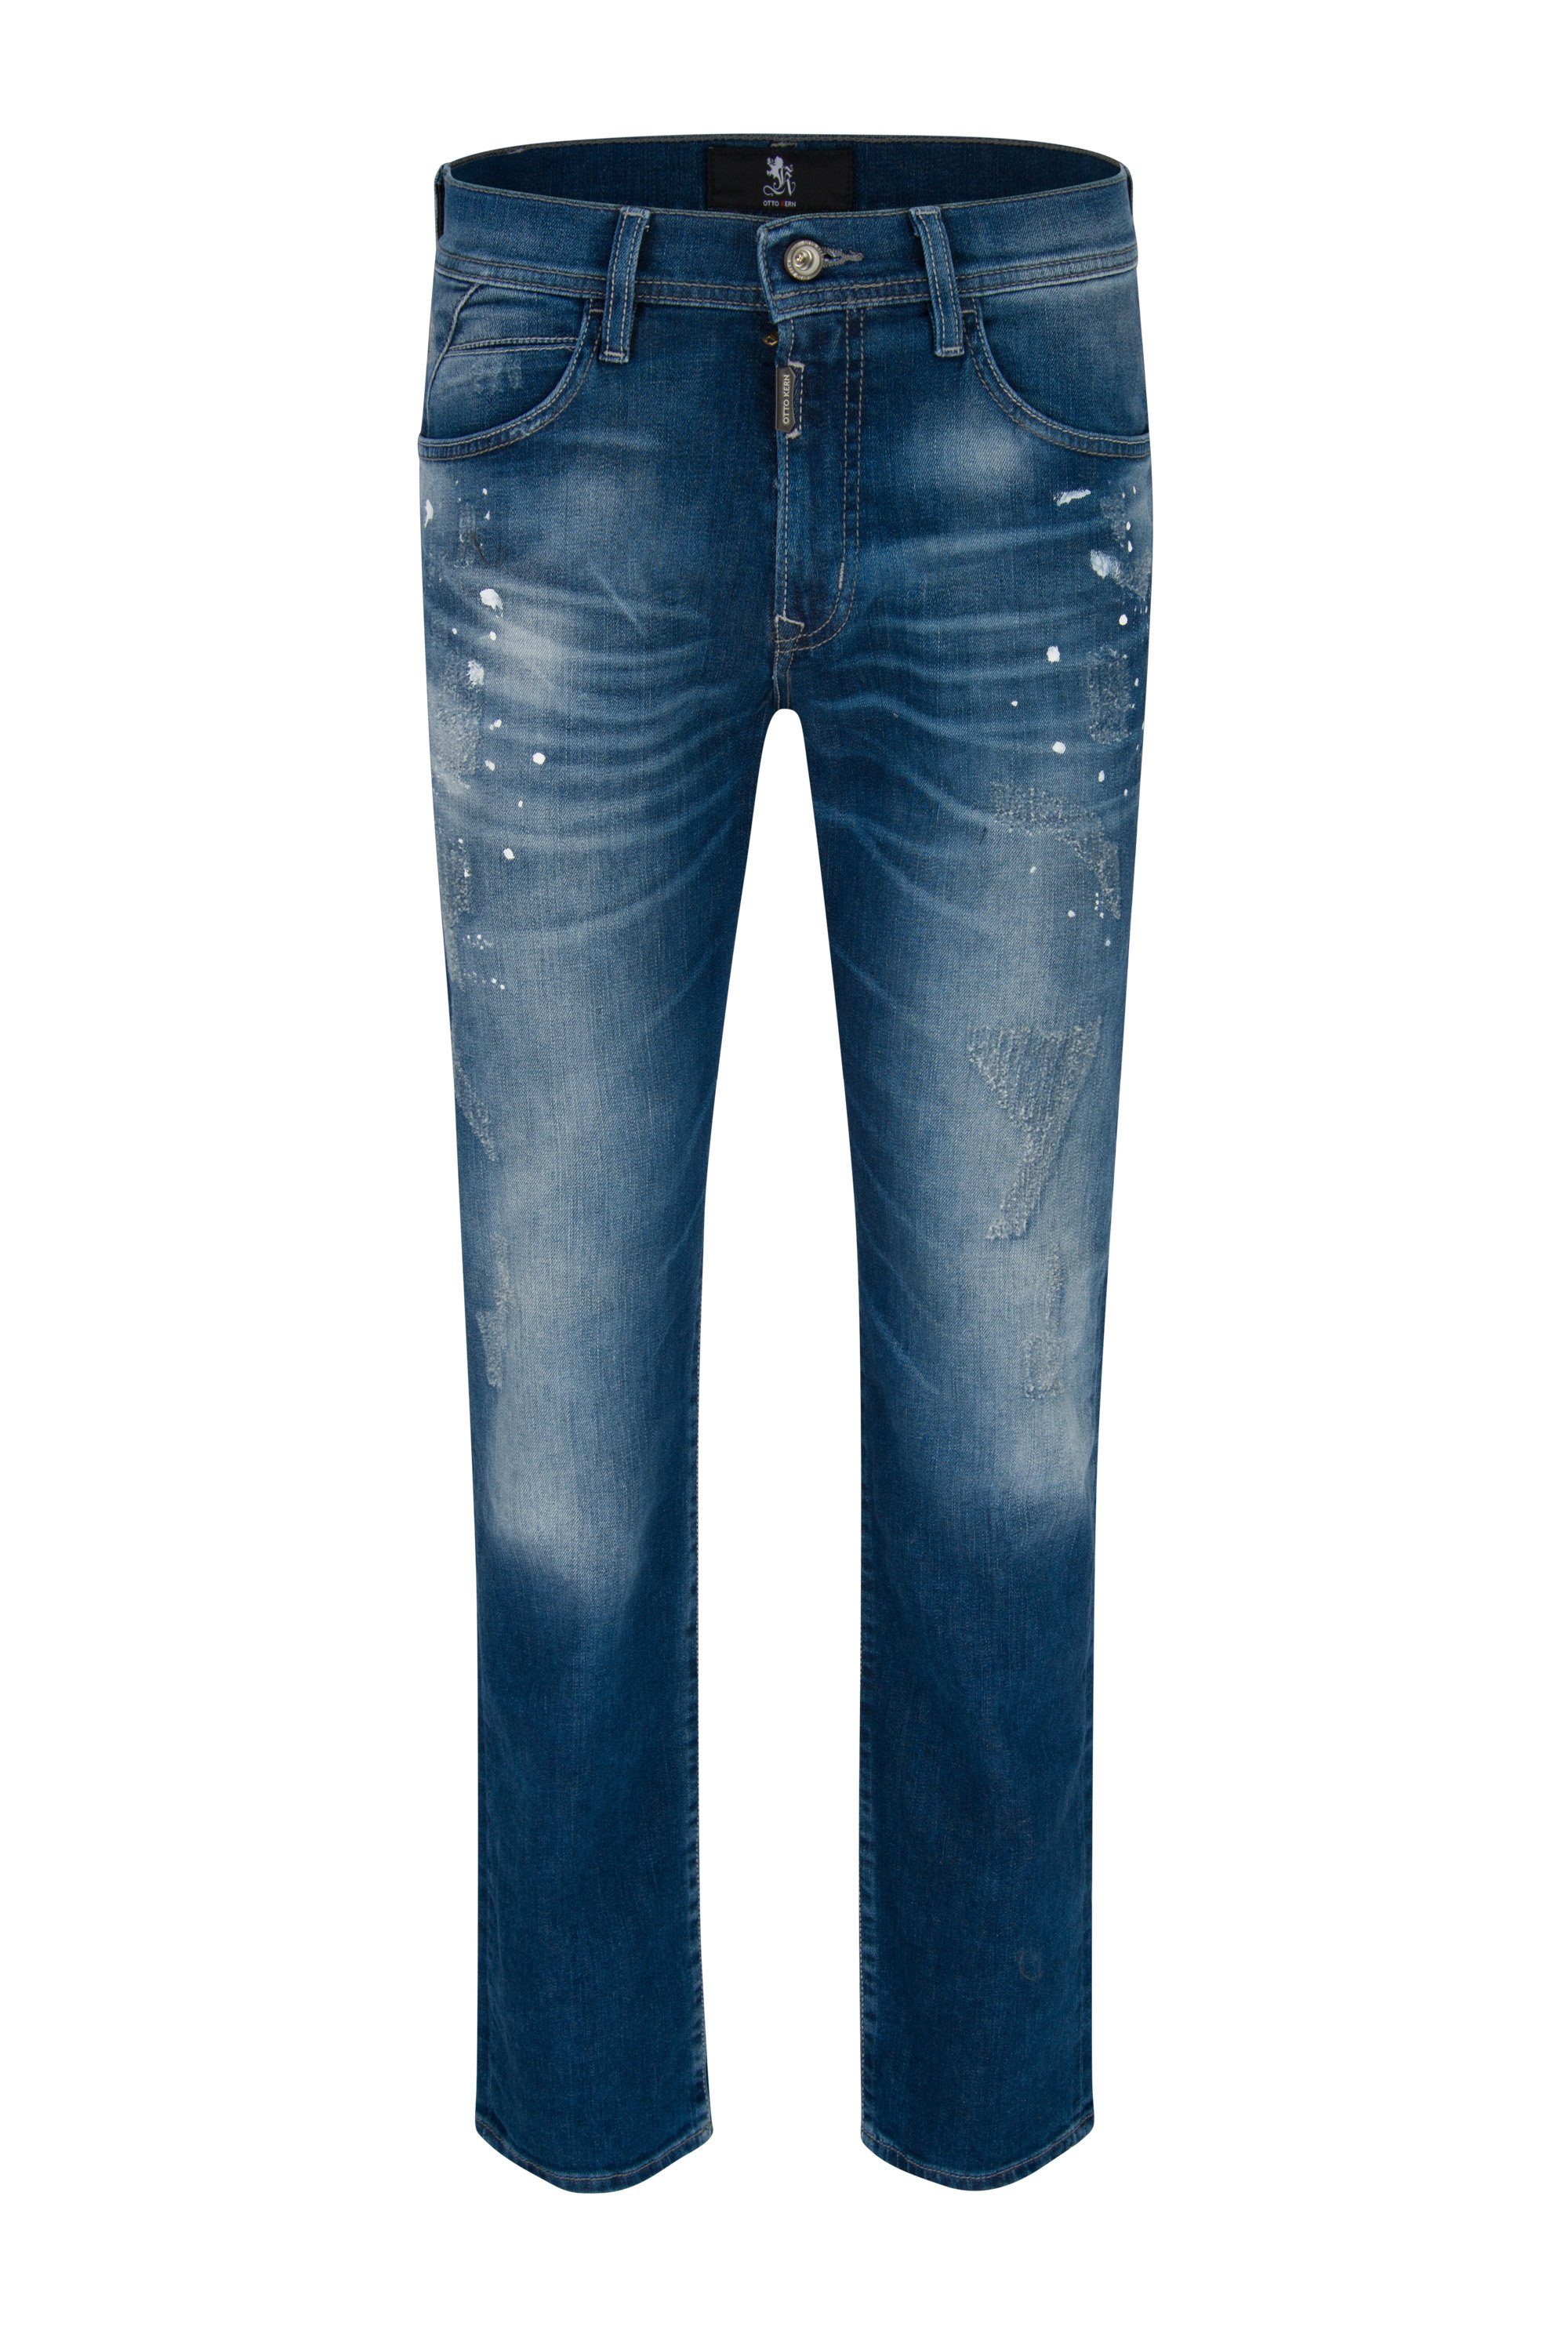  Kern 5-Pocket-Jeans OTTO KERN OK 03 blue fashion 67023 6213.6827